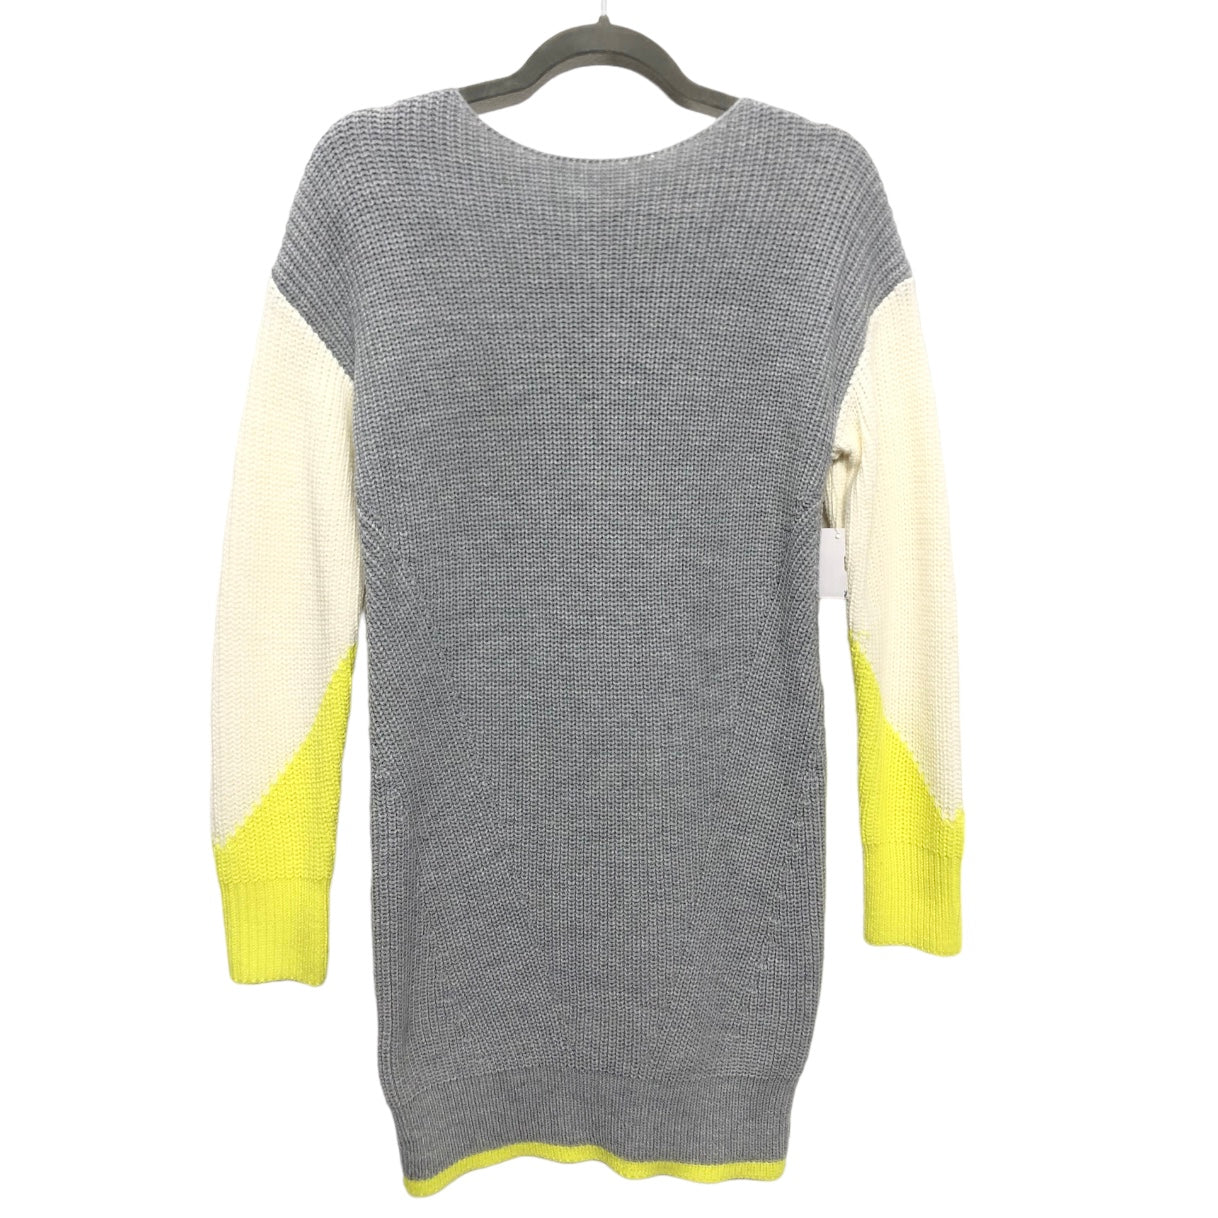 Dress Sweater By Gianni Bini  Size: Xs